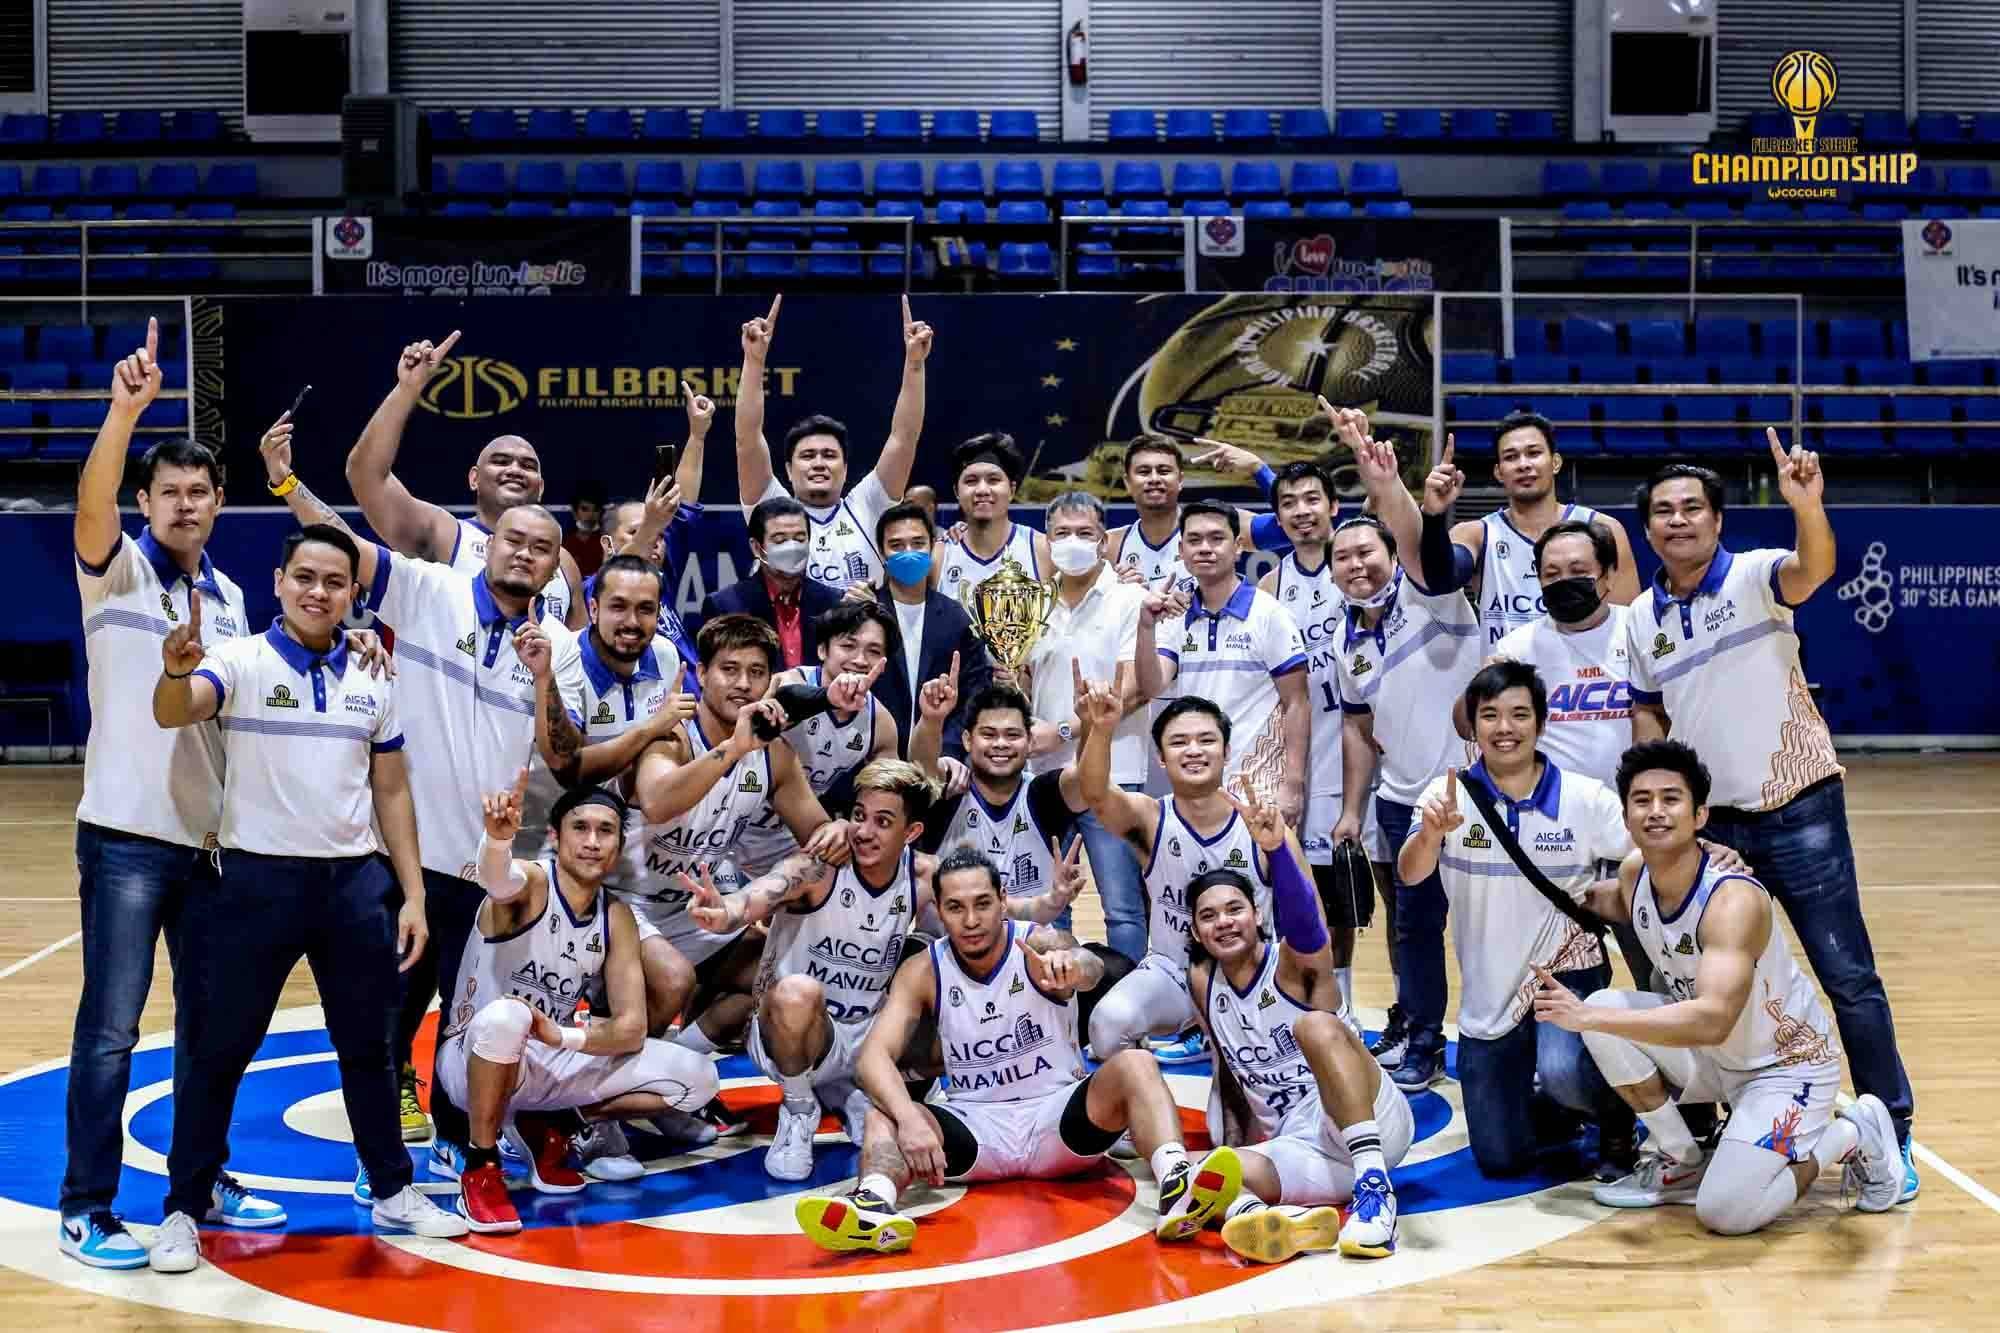 2021-Filbasket-Subic-AICC-Manila-vs-San-Juan- Mabulac, Bitoon have mixed emotions facing ex-team Basilan in MPBL Final Basketball MPBL News  - philippine sports news